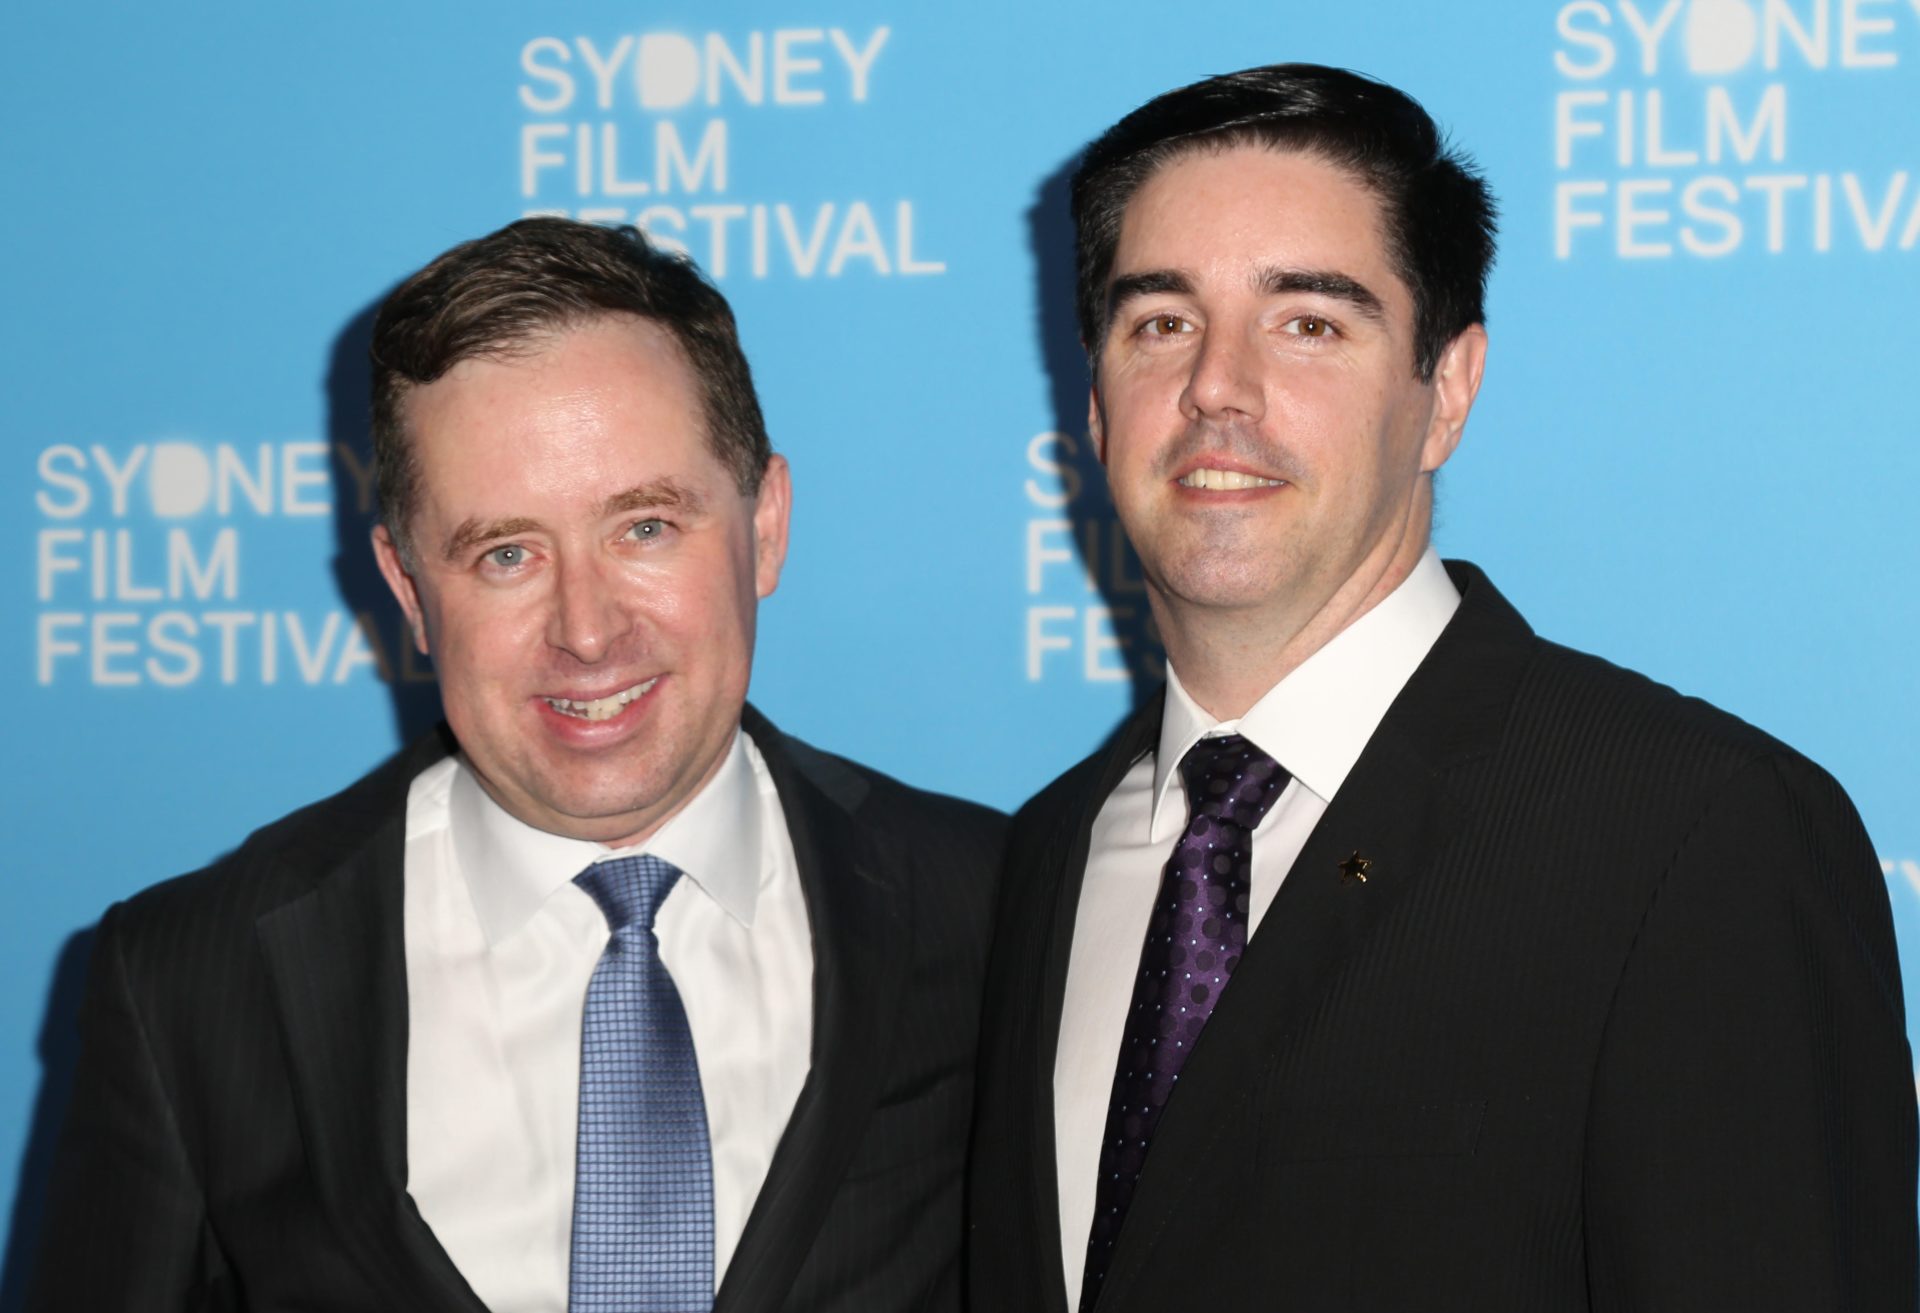 Alan Joyce and his husband Shane Lloyd in June 2015 at the Sydney Film Festival. 